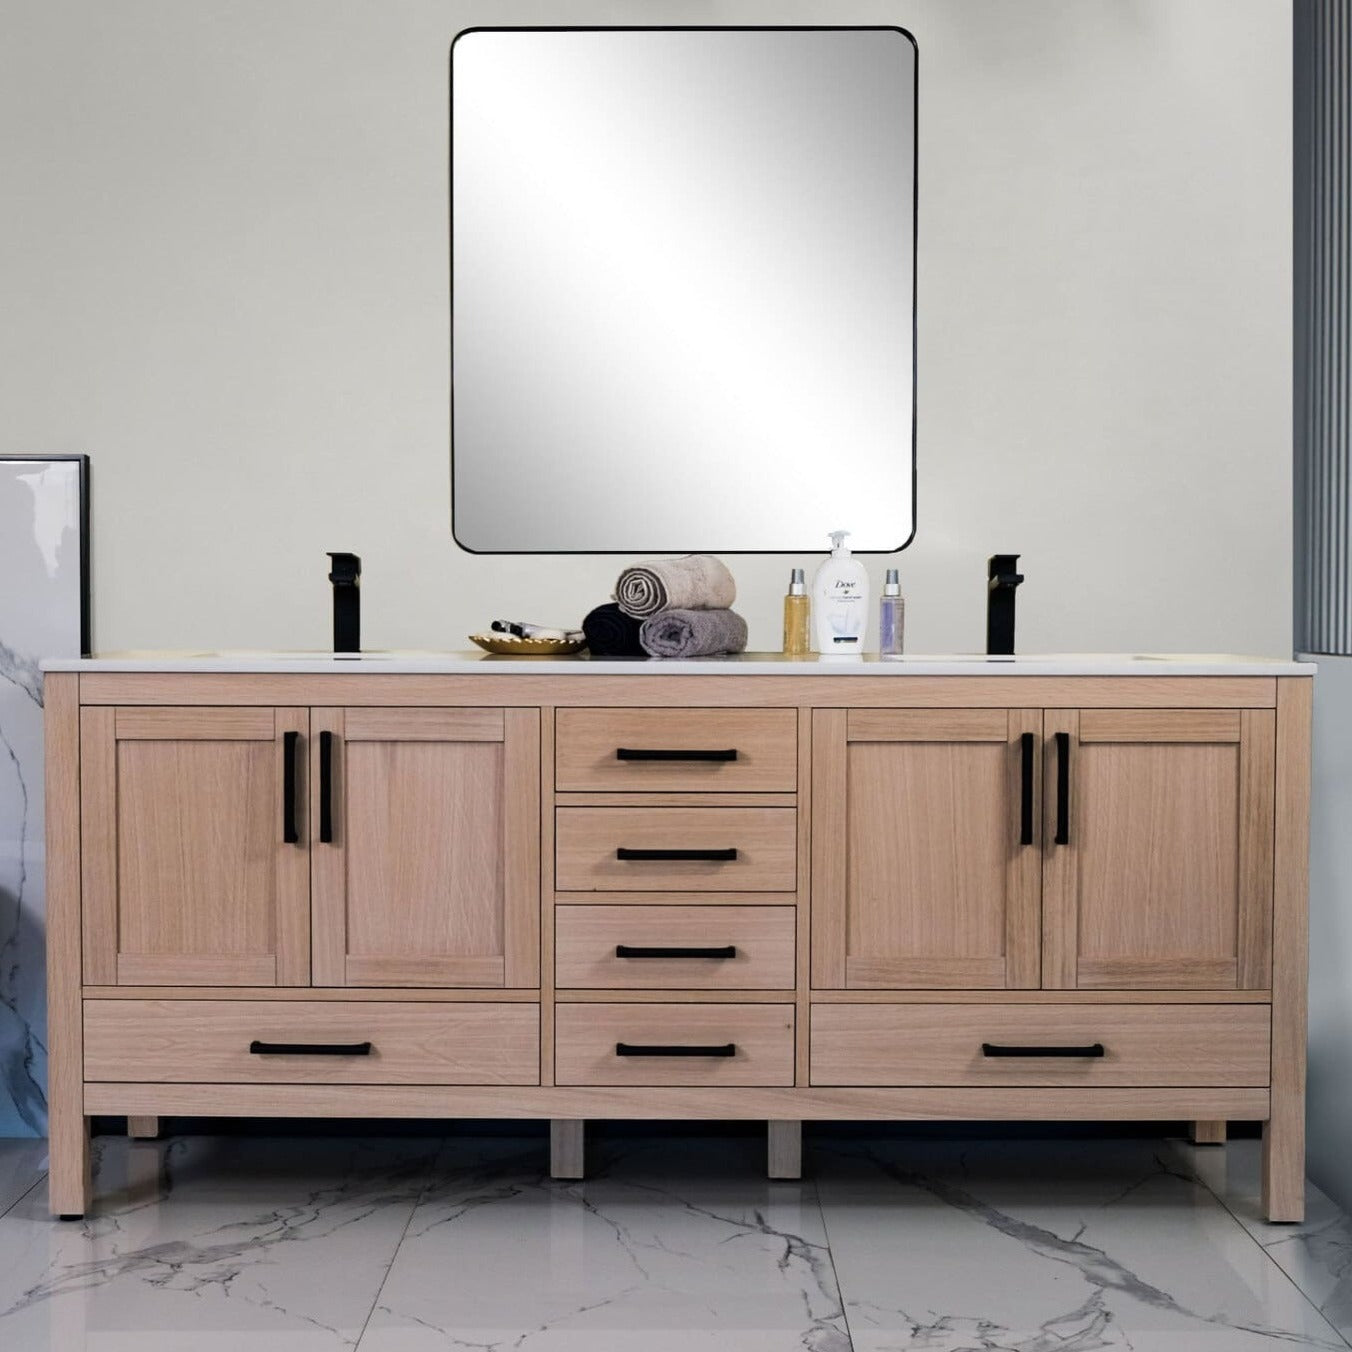 Ahley Bathroom Vanity Homelero 72"  #size_72"  #color_natural oak  #hardware_brass